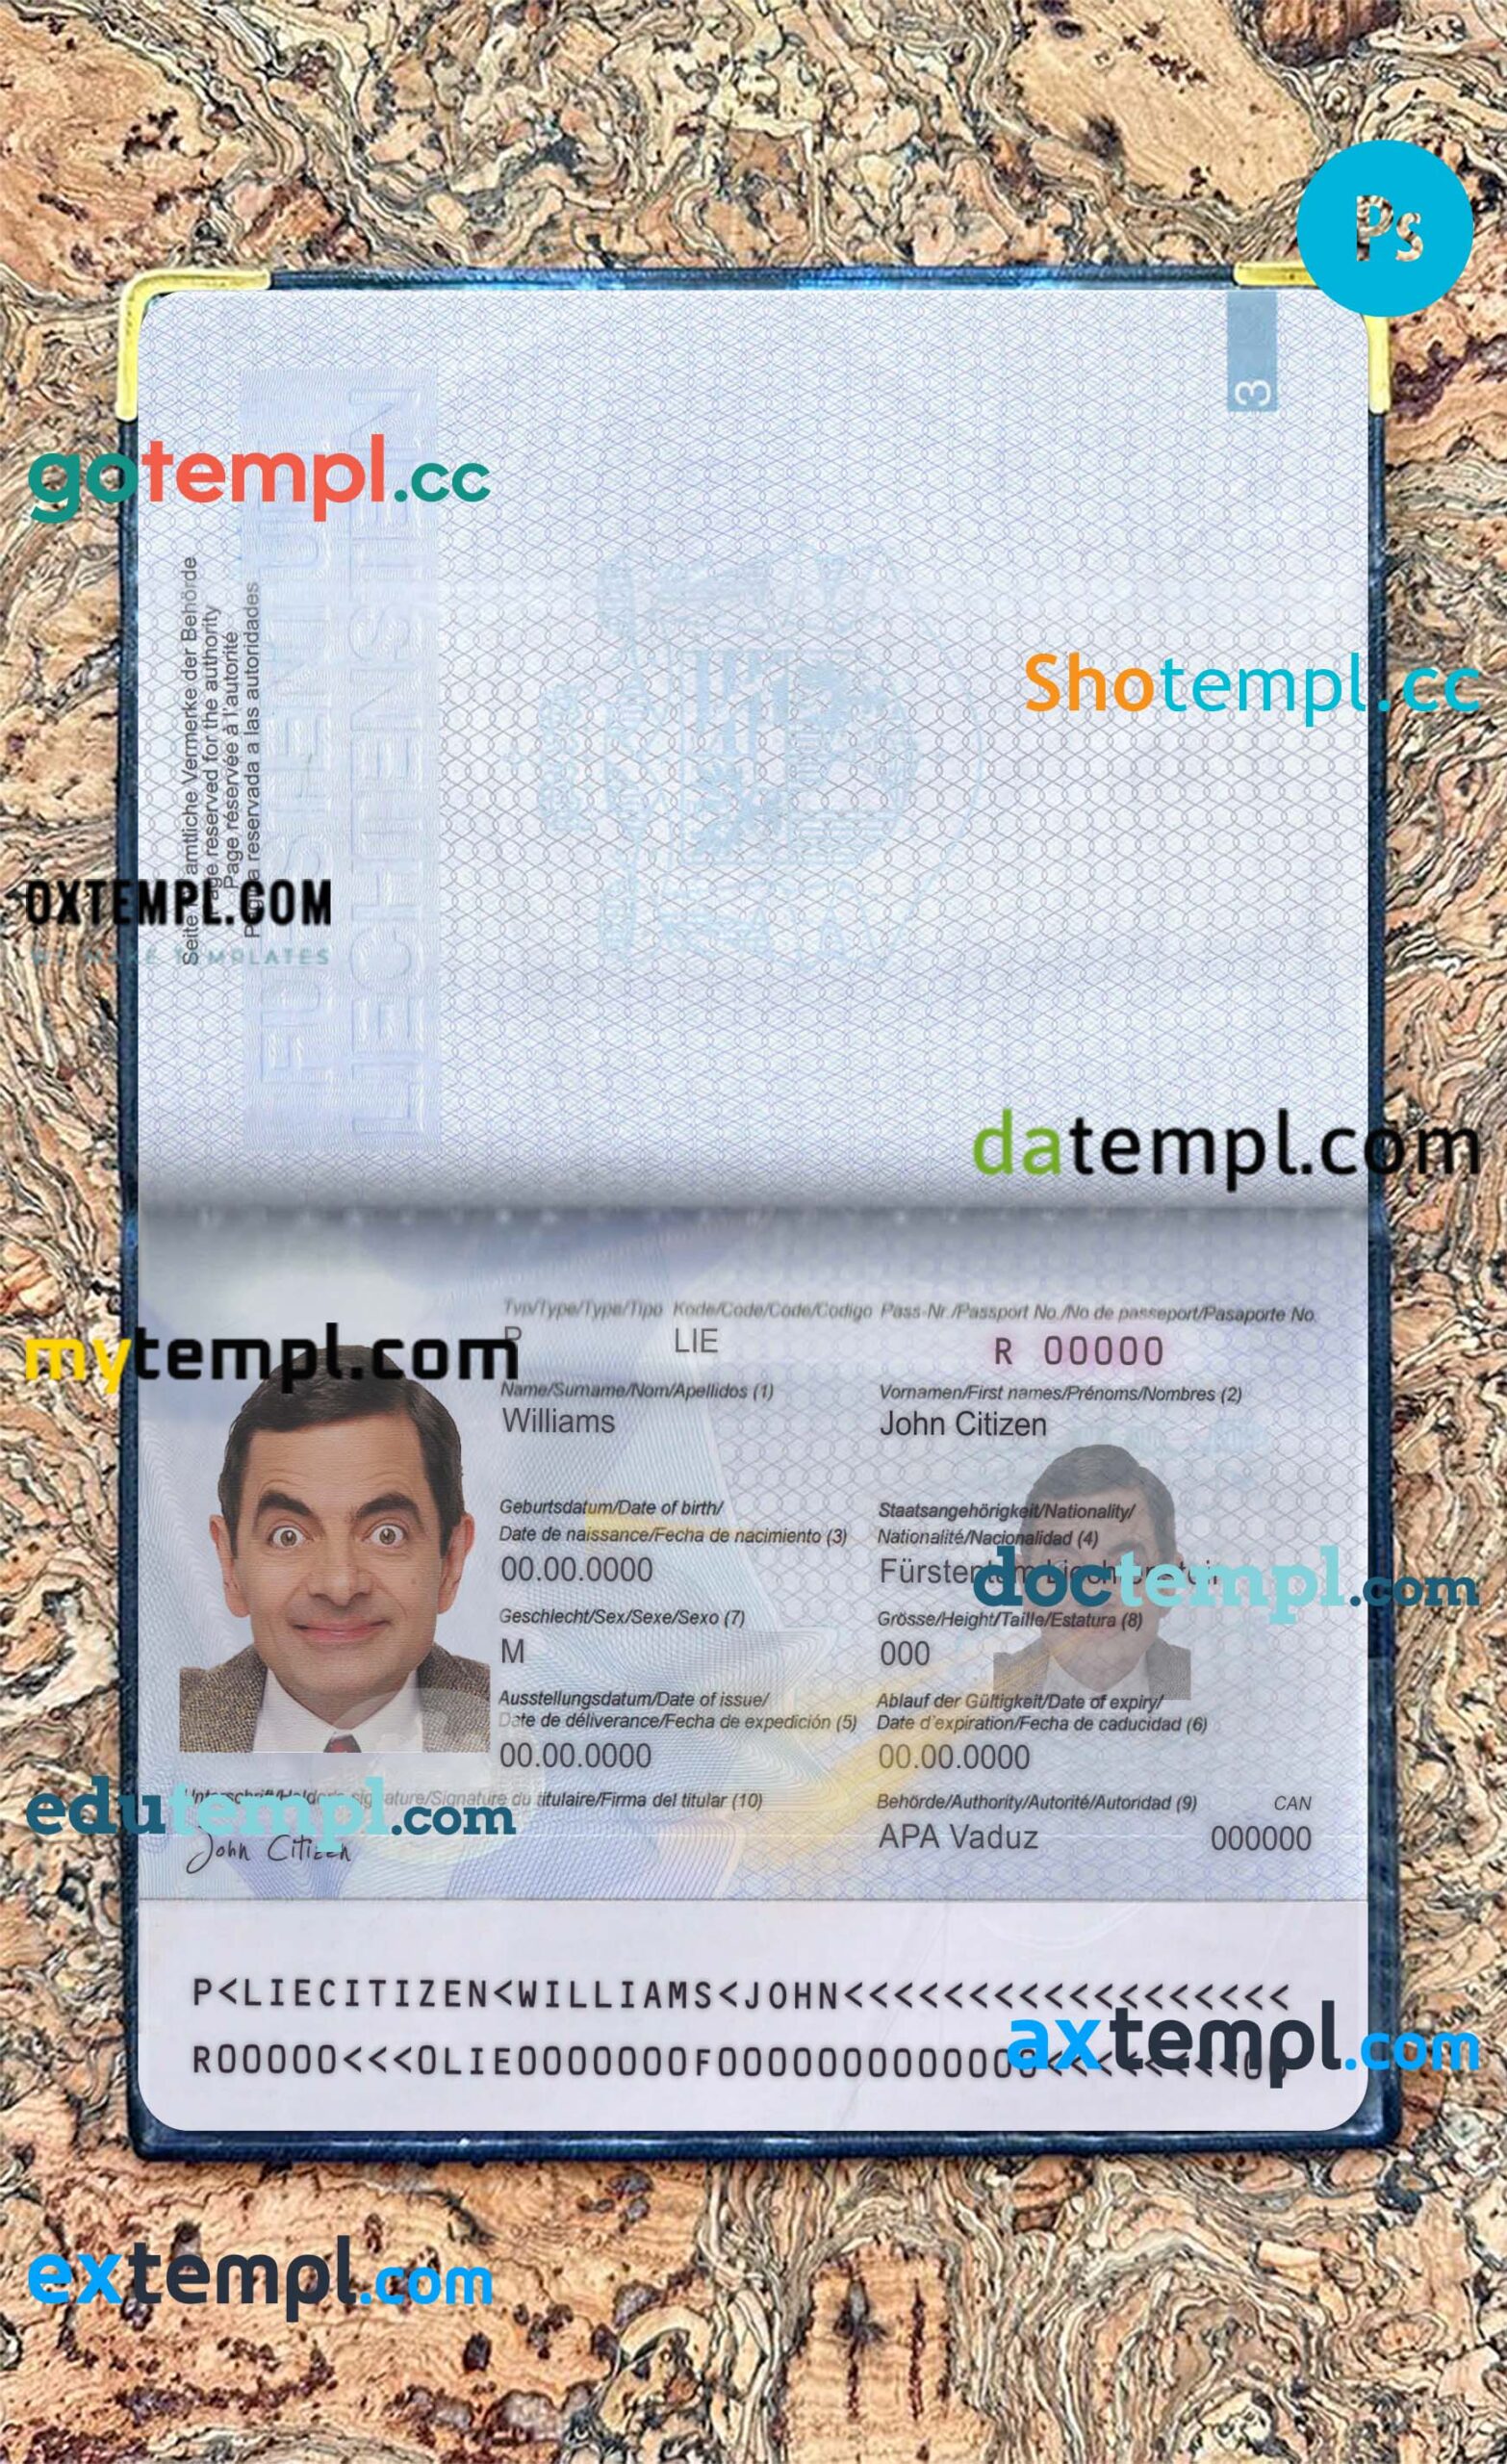 Liechtenstein passport editable PSD files, scan and photo-realistic look, 2 in 1